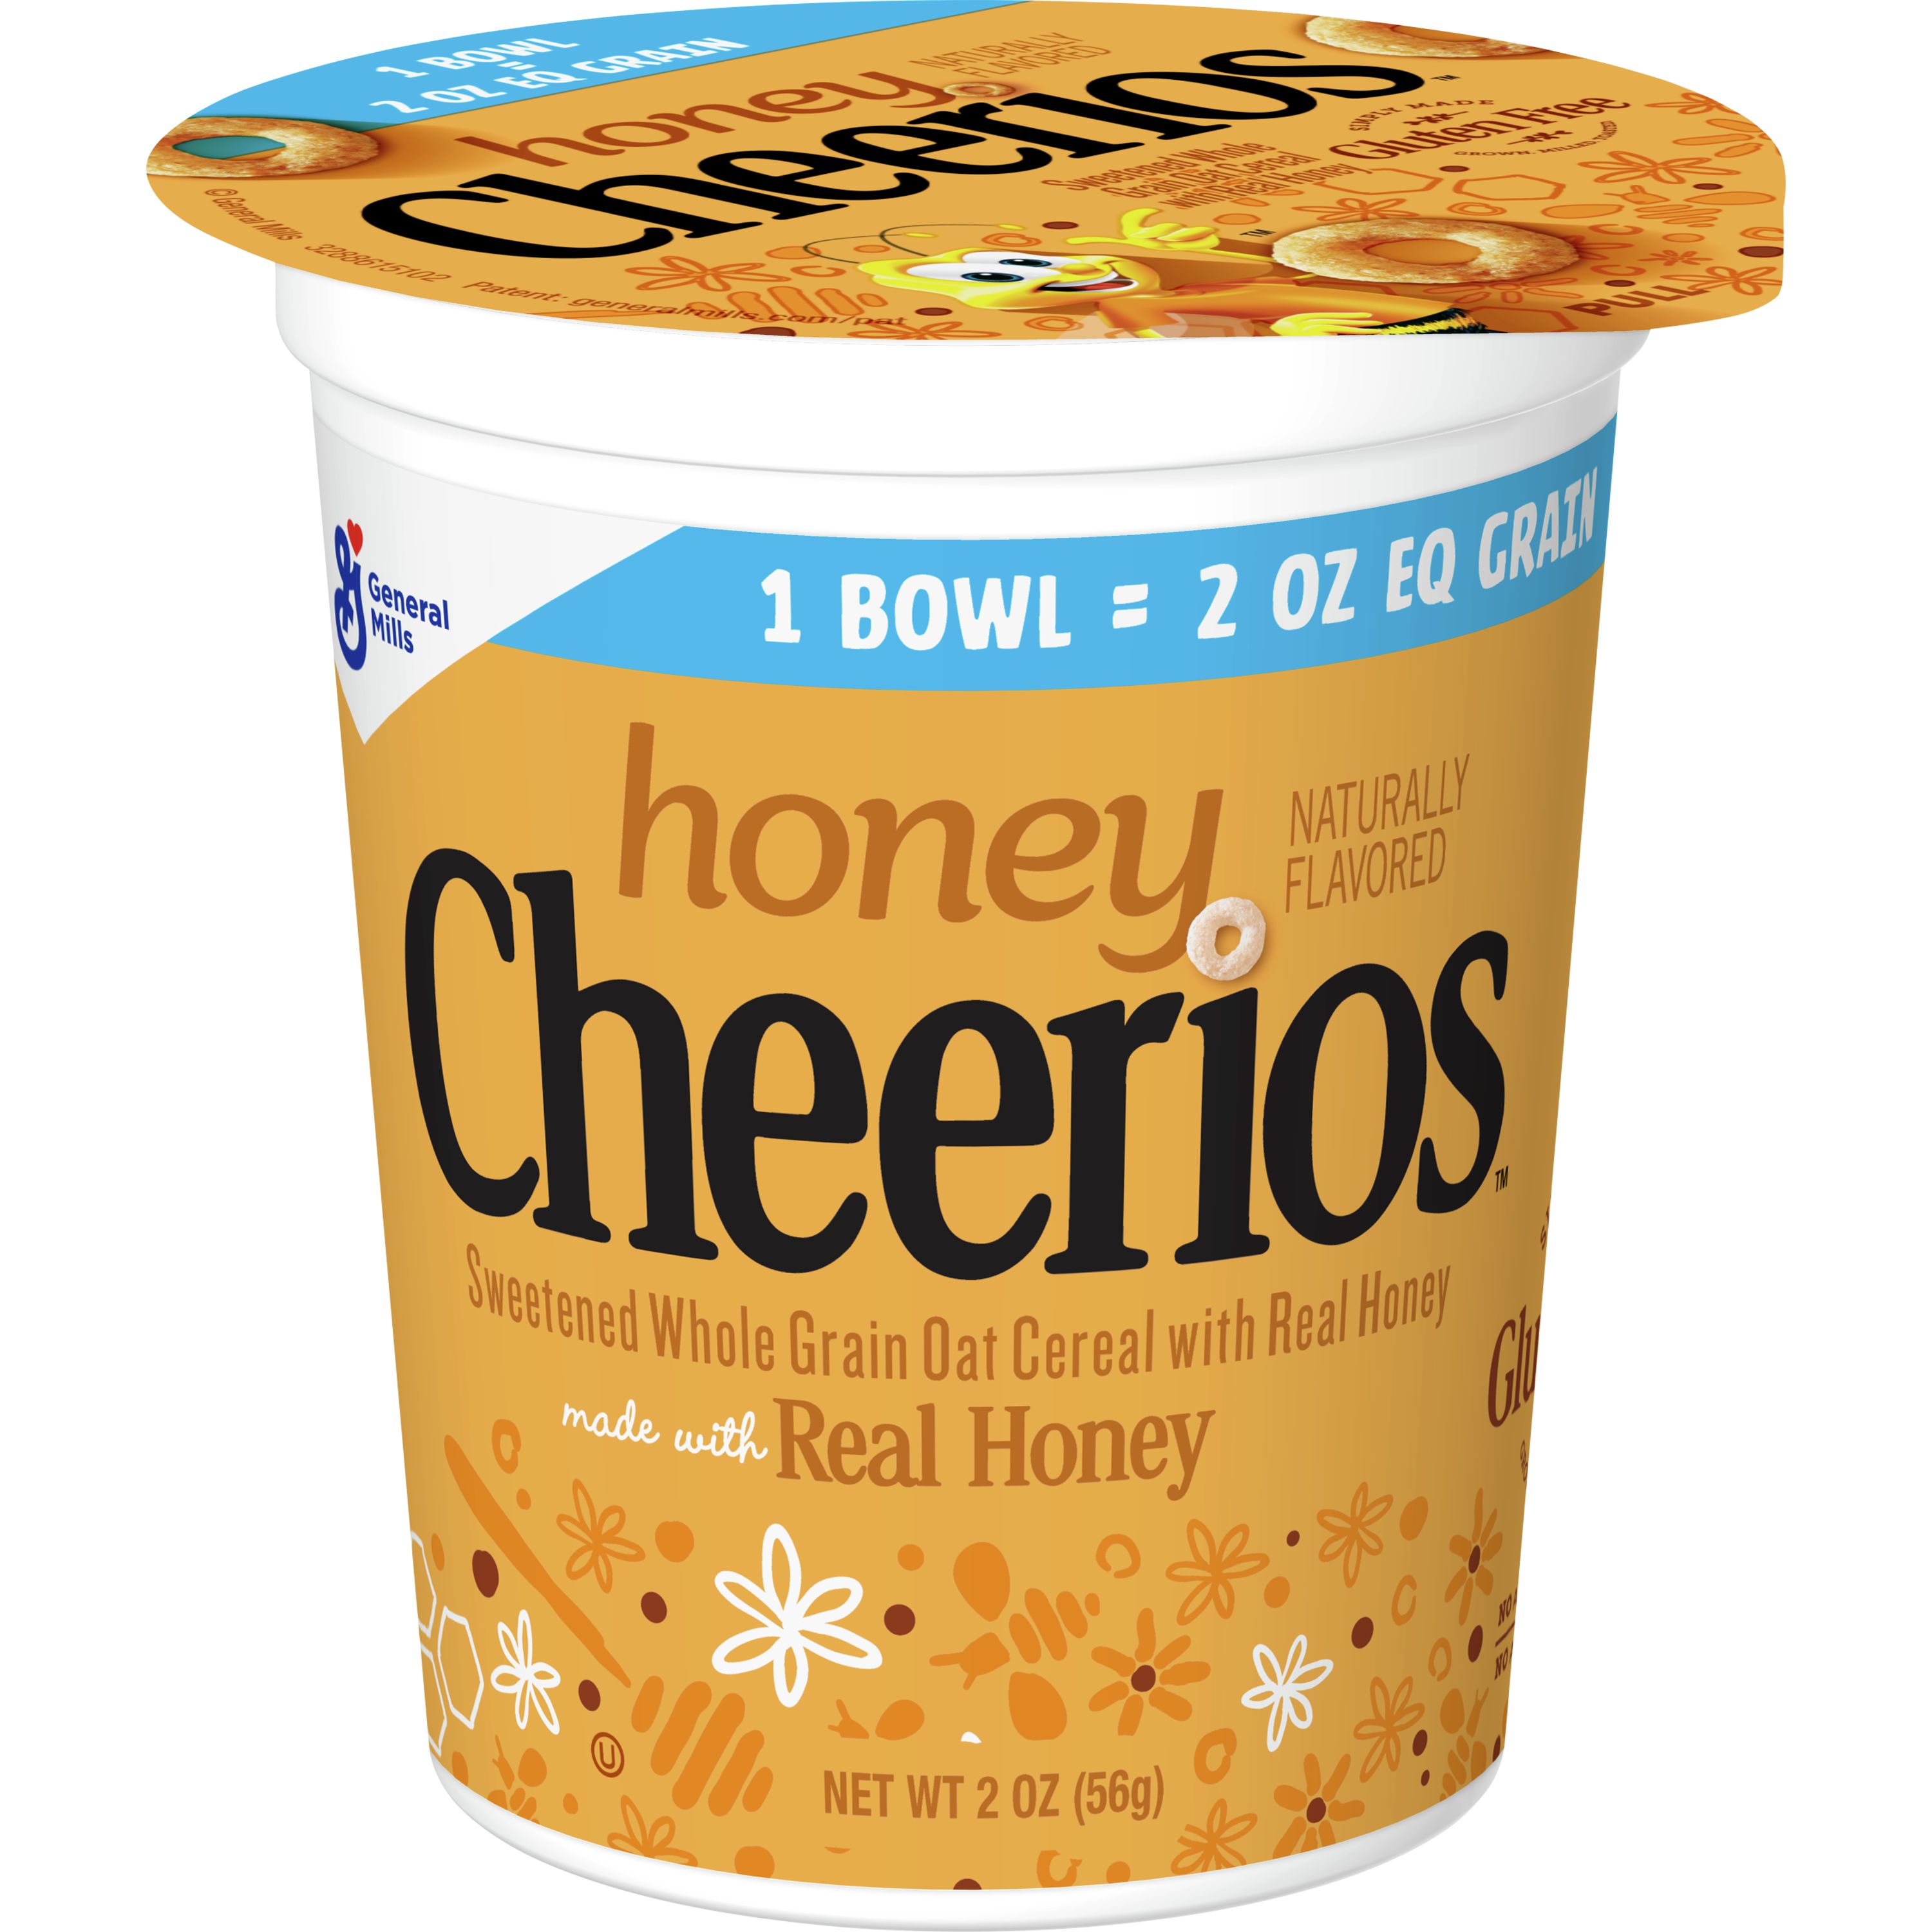 E Pallet - Honey Cheerios Cereal Bowlpak K12 2oz eq, 60/2oz